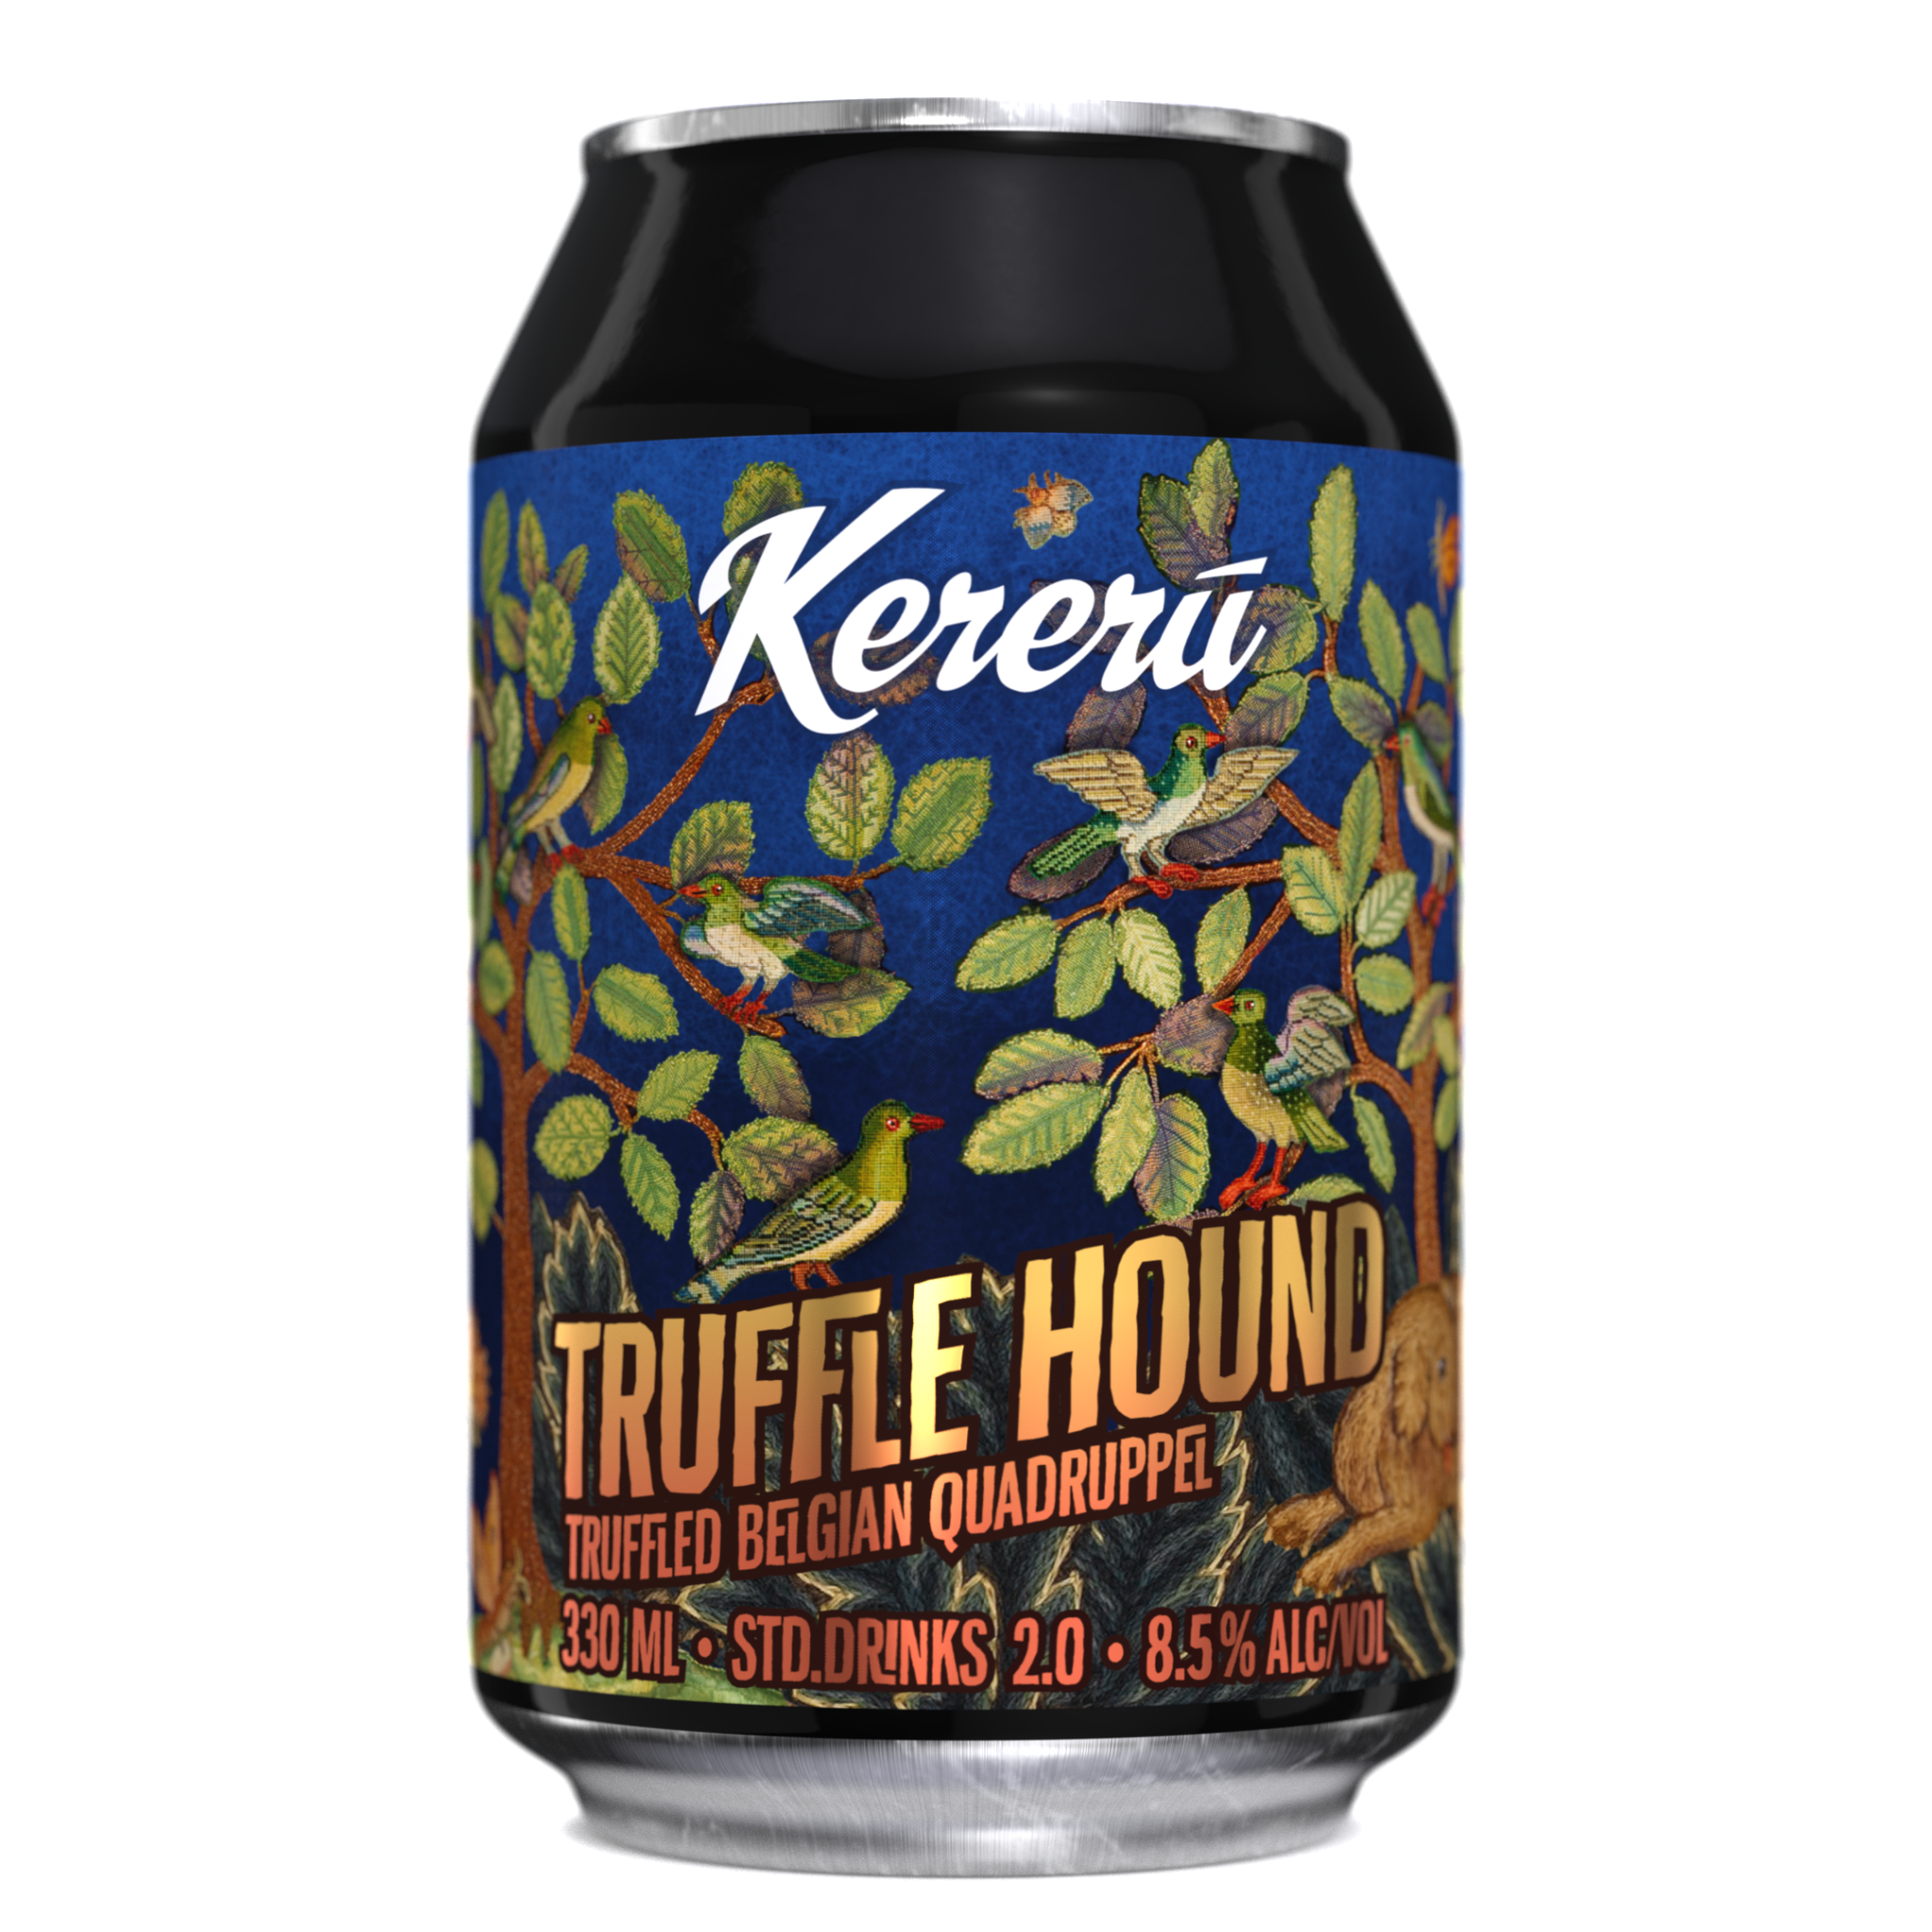 Featured Beer: Truffle Hound